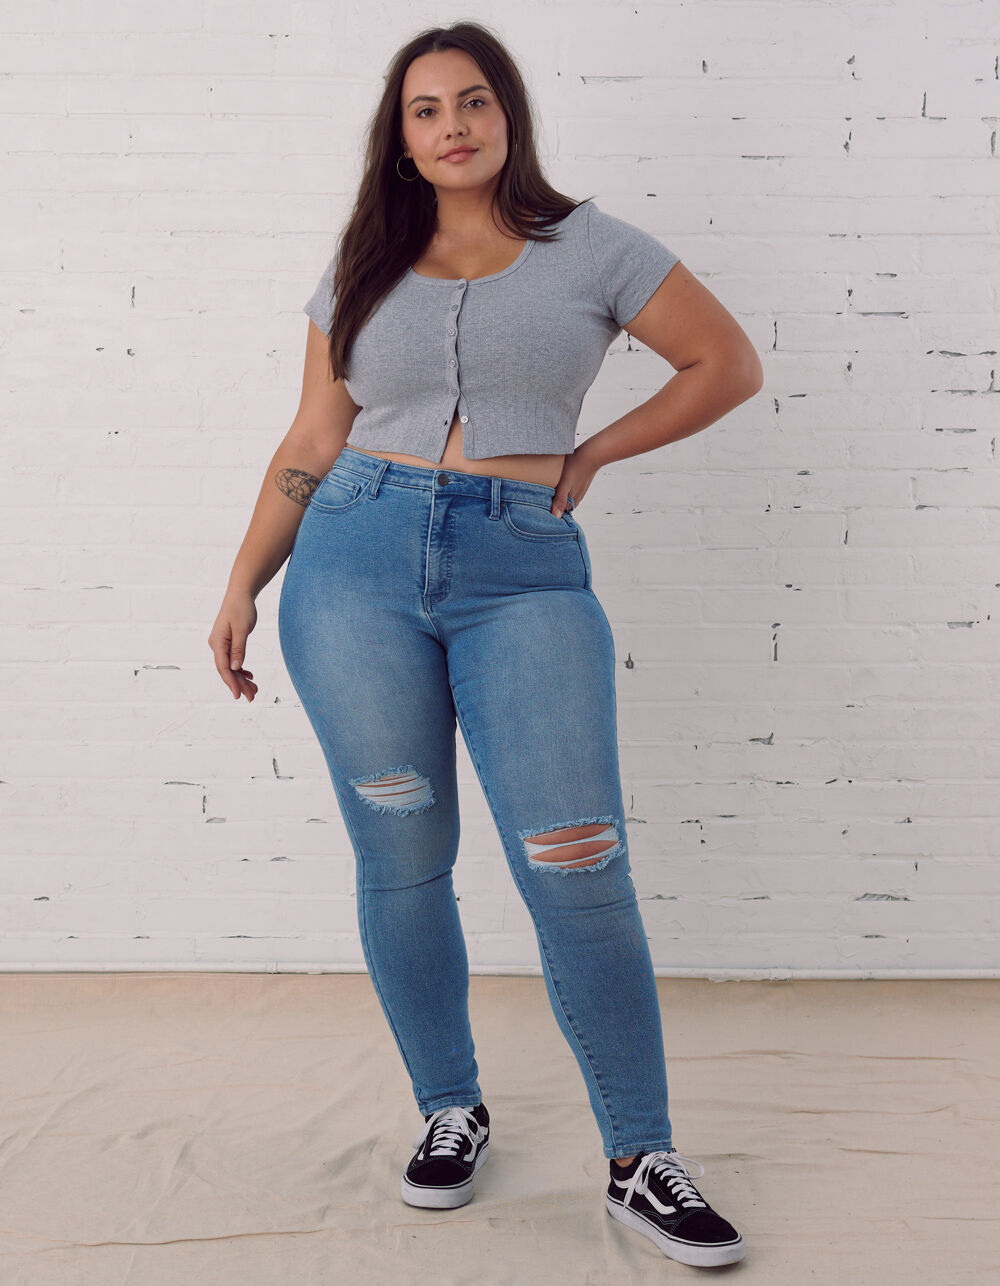 Denim Loves Curves – Jeans For Curvy Women - THE JEANS BLOG